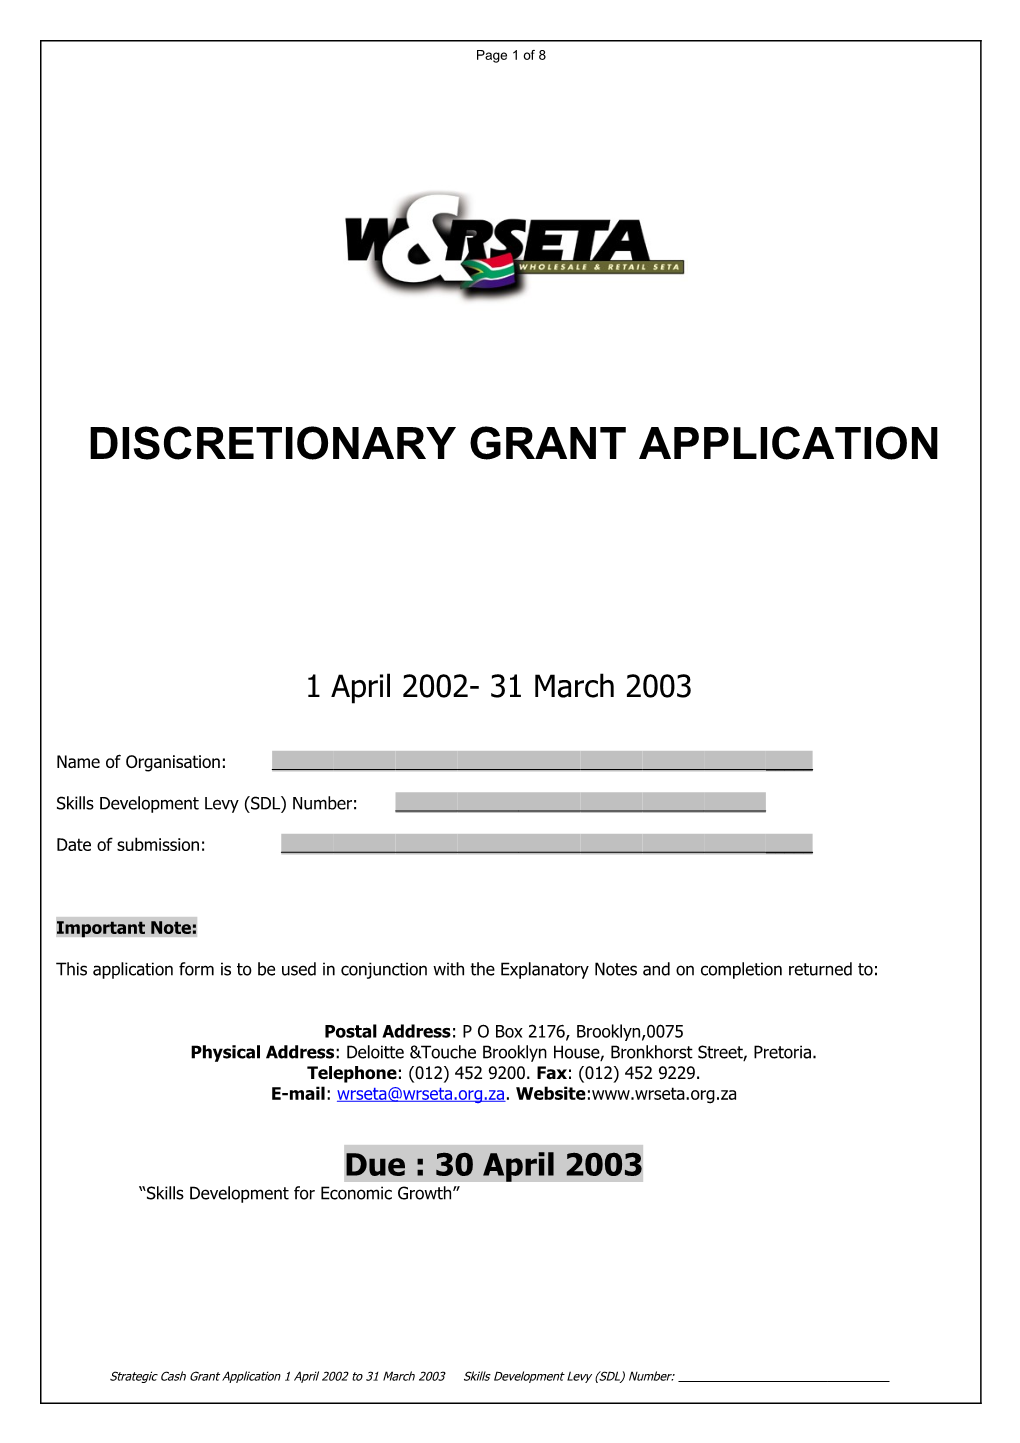 Discretionary Grant Application